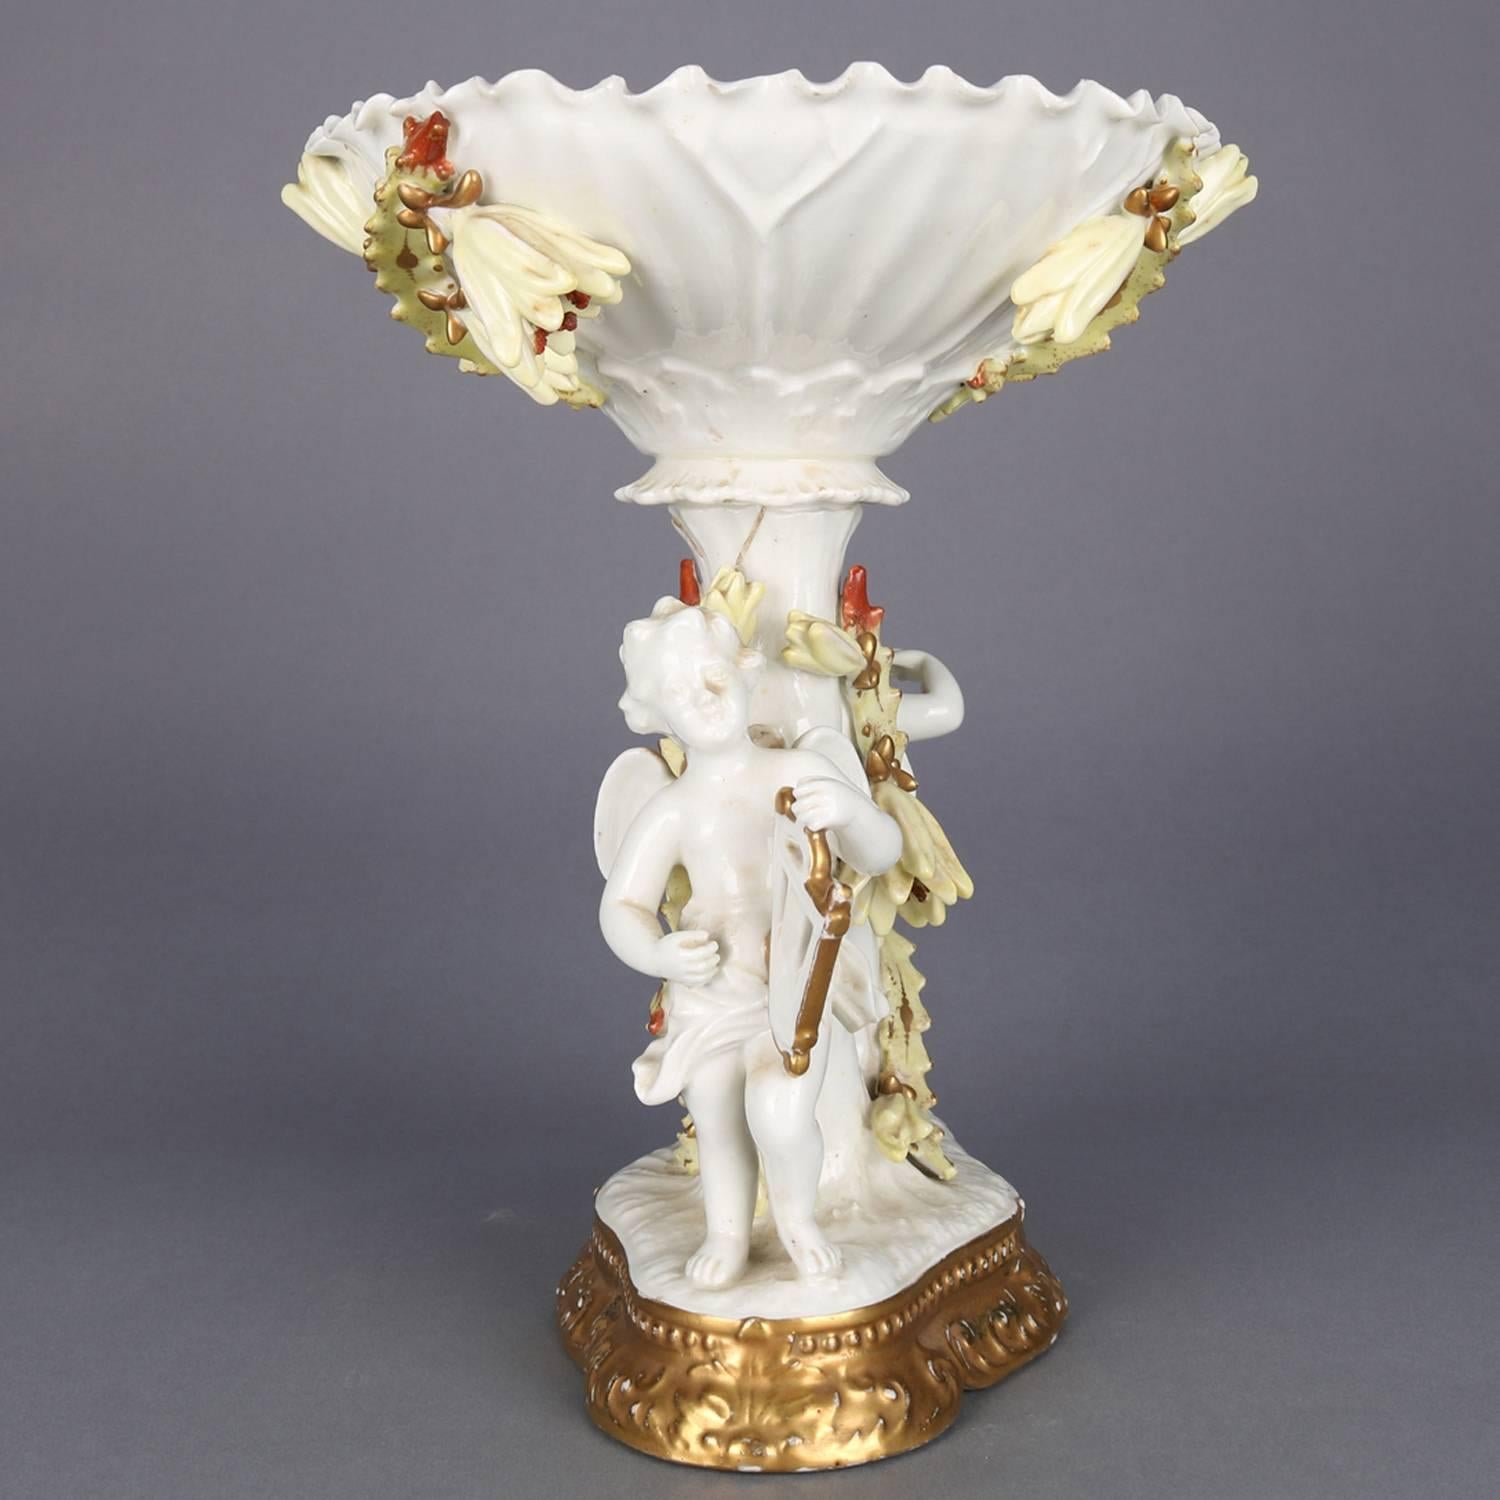 Porcelain Antique French Limoges Classical Meissen School Figural Gilt Cherub Compote